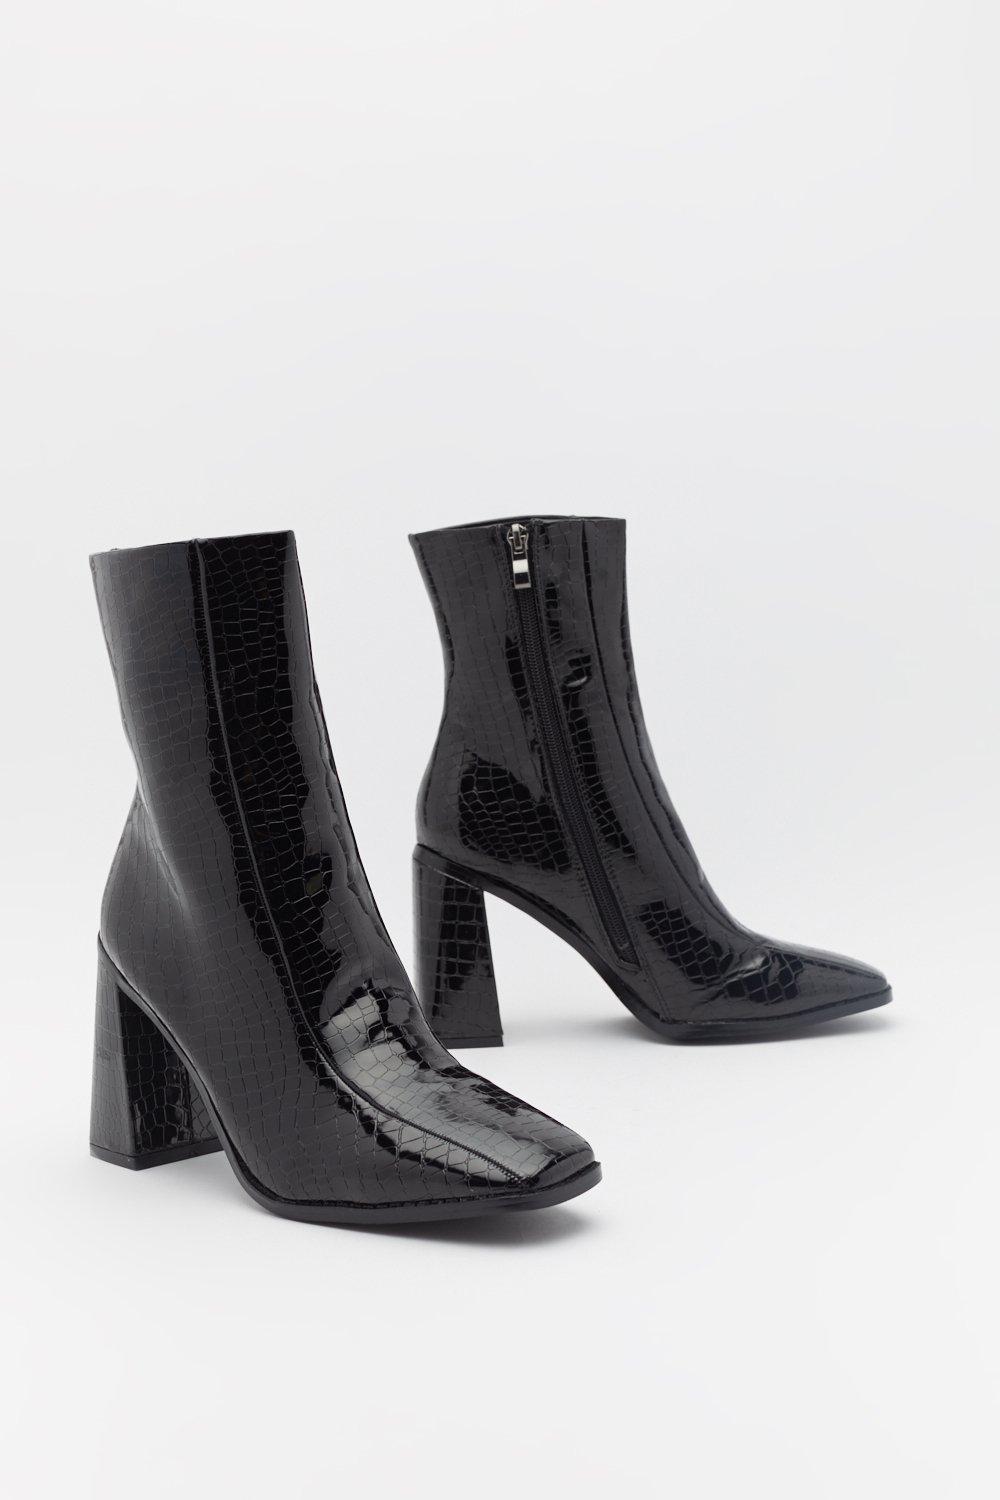 black boots square toe